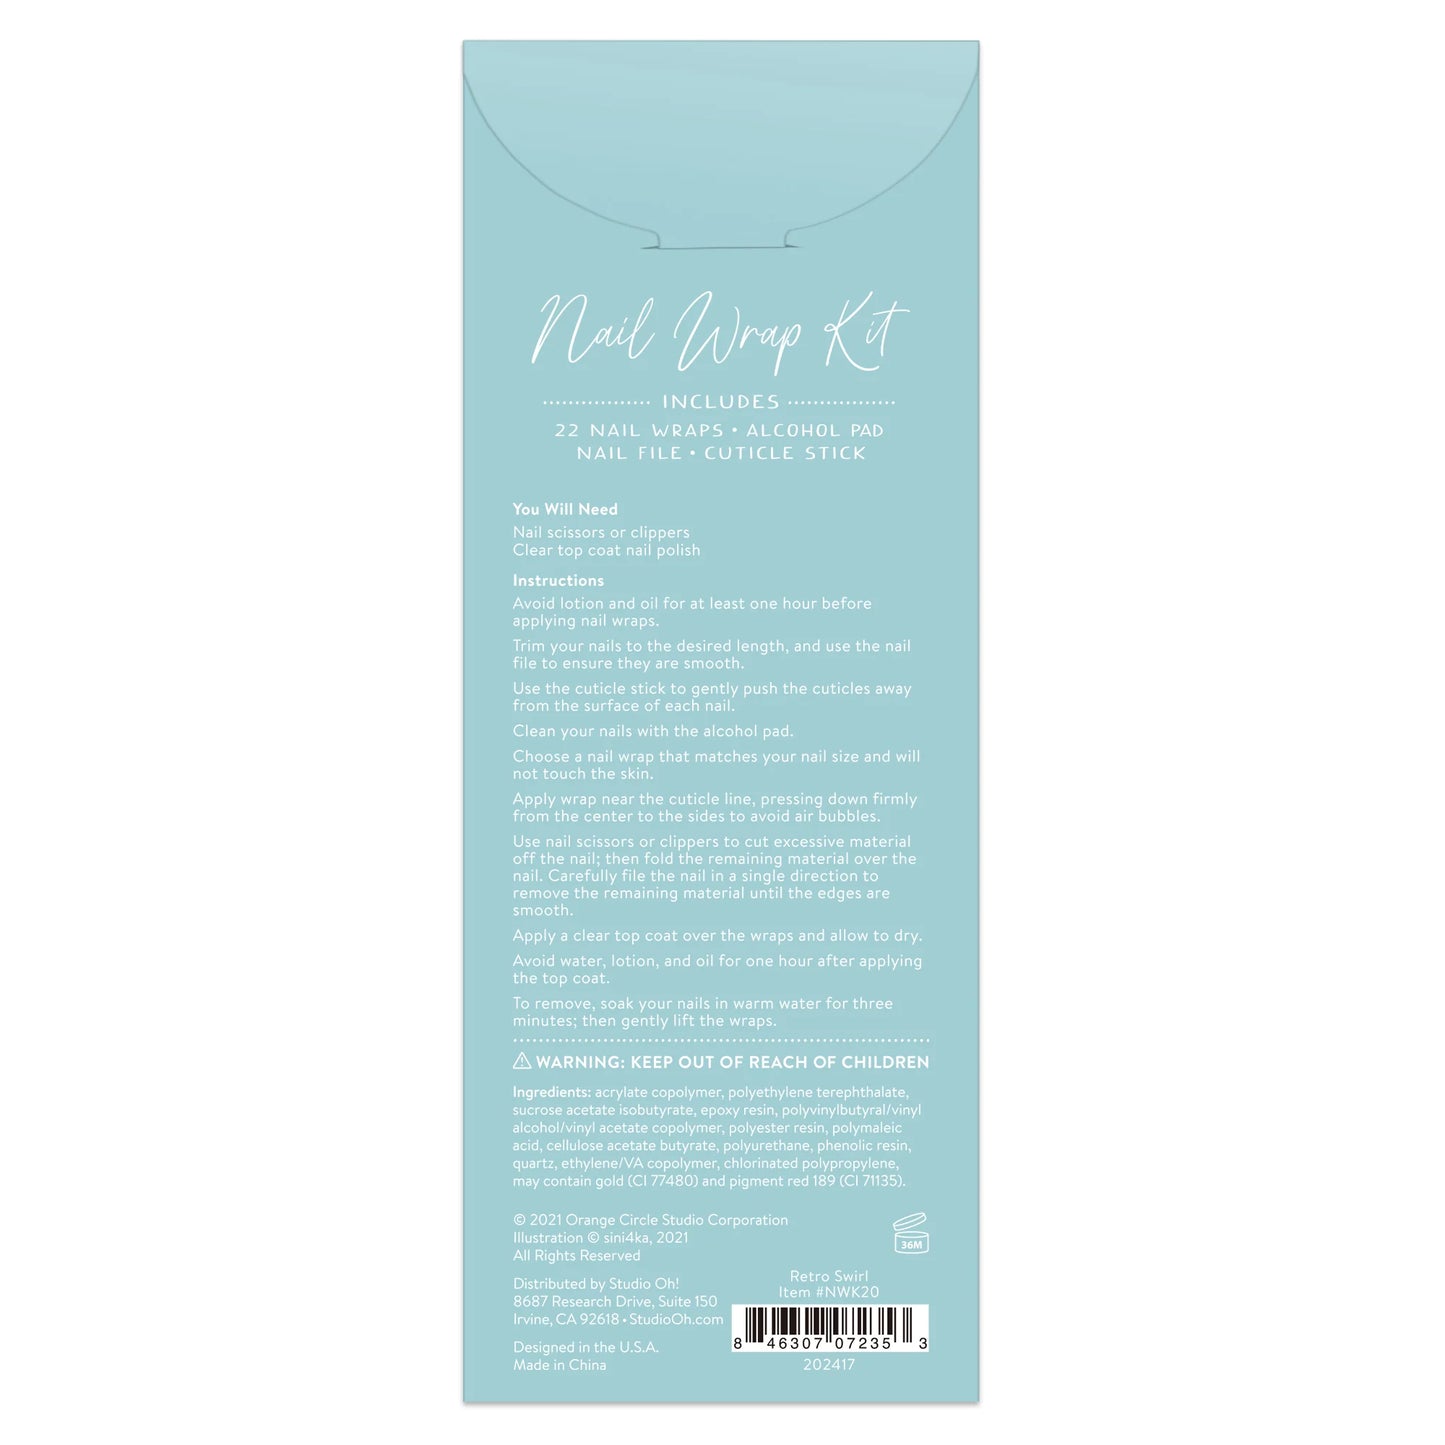 Mani Nail Wrap Kit: Retro Swirl